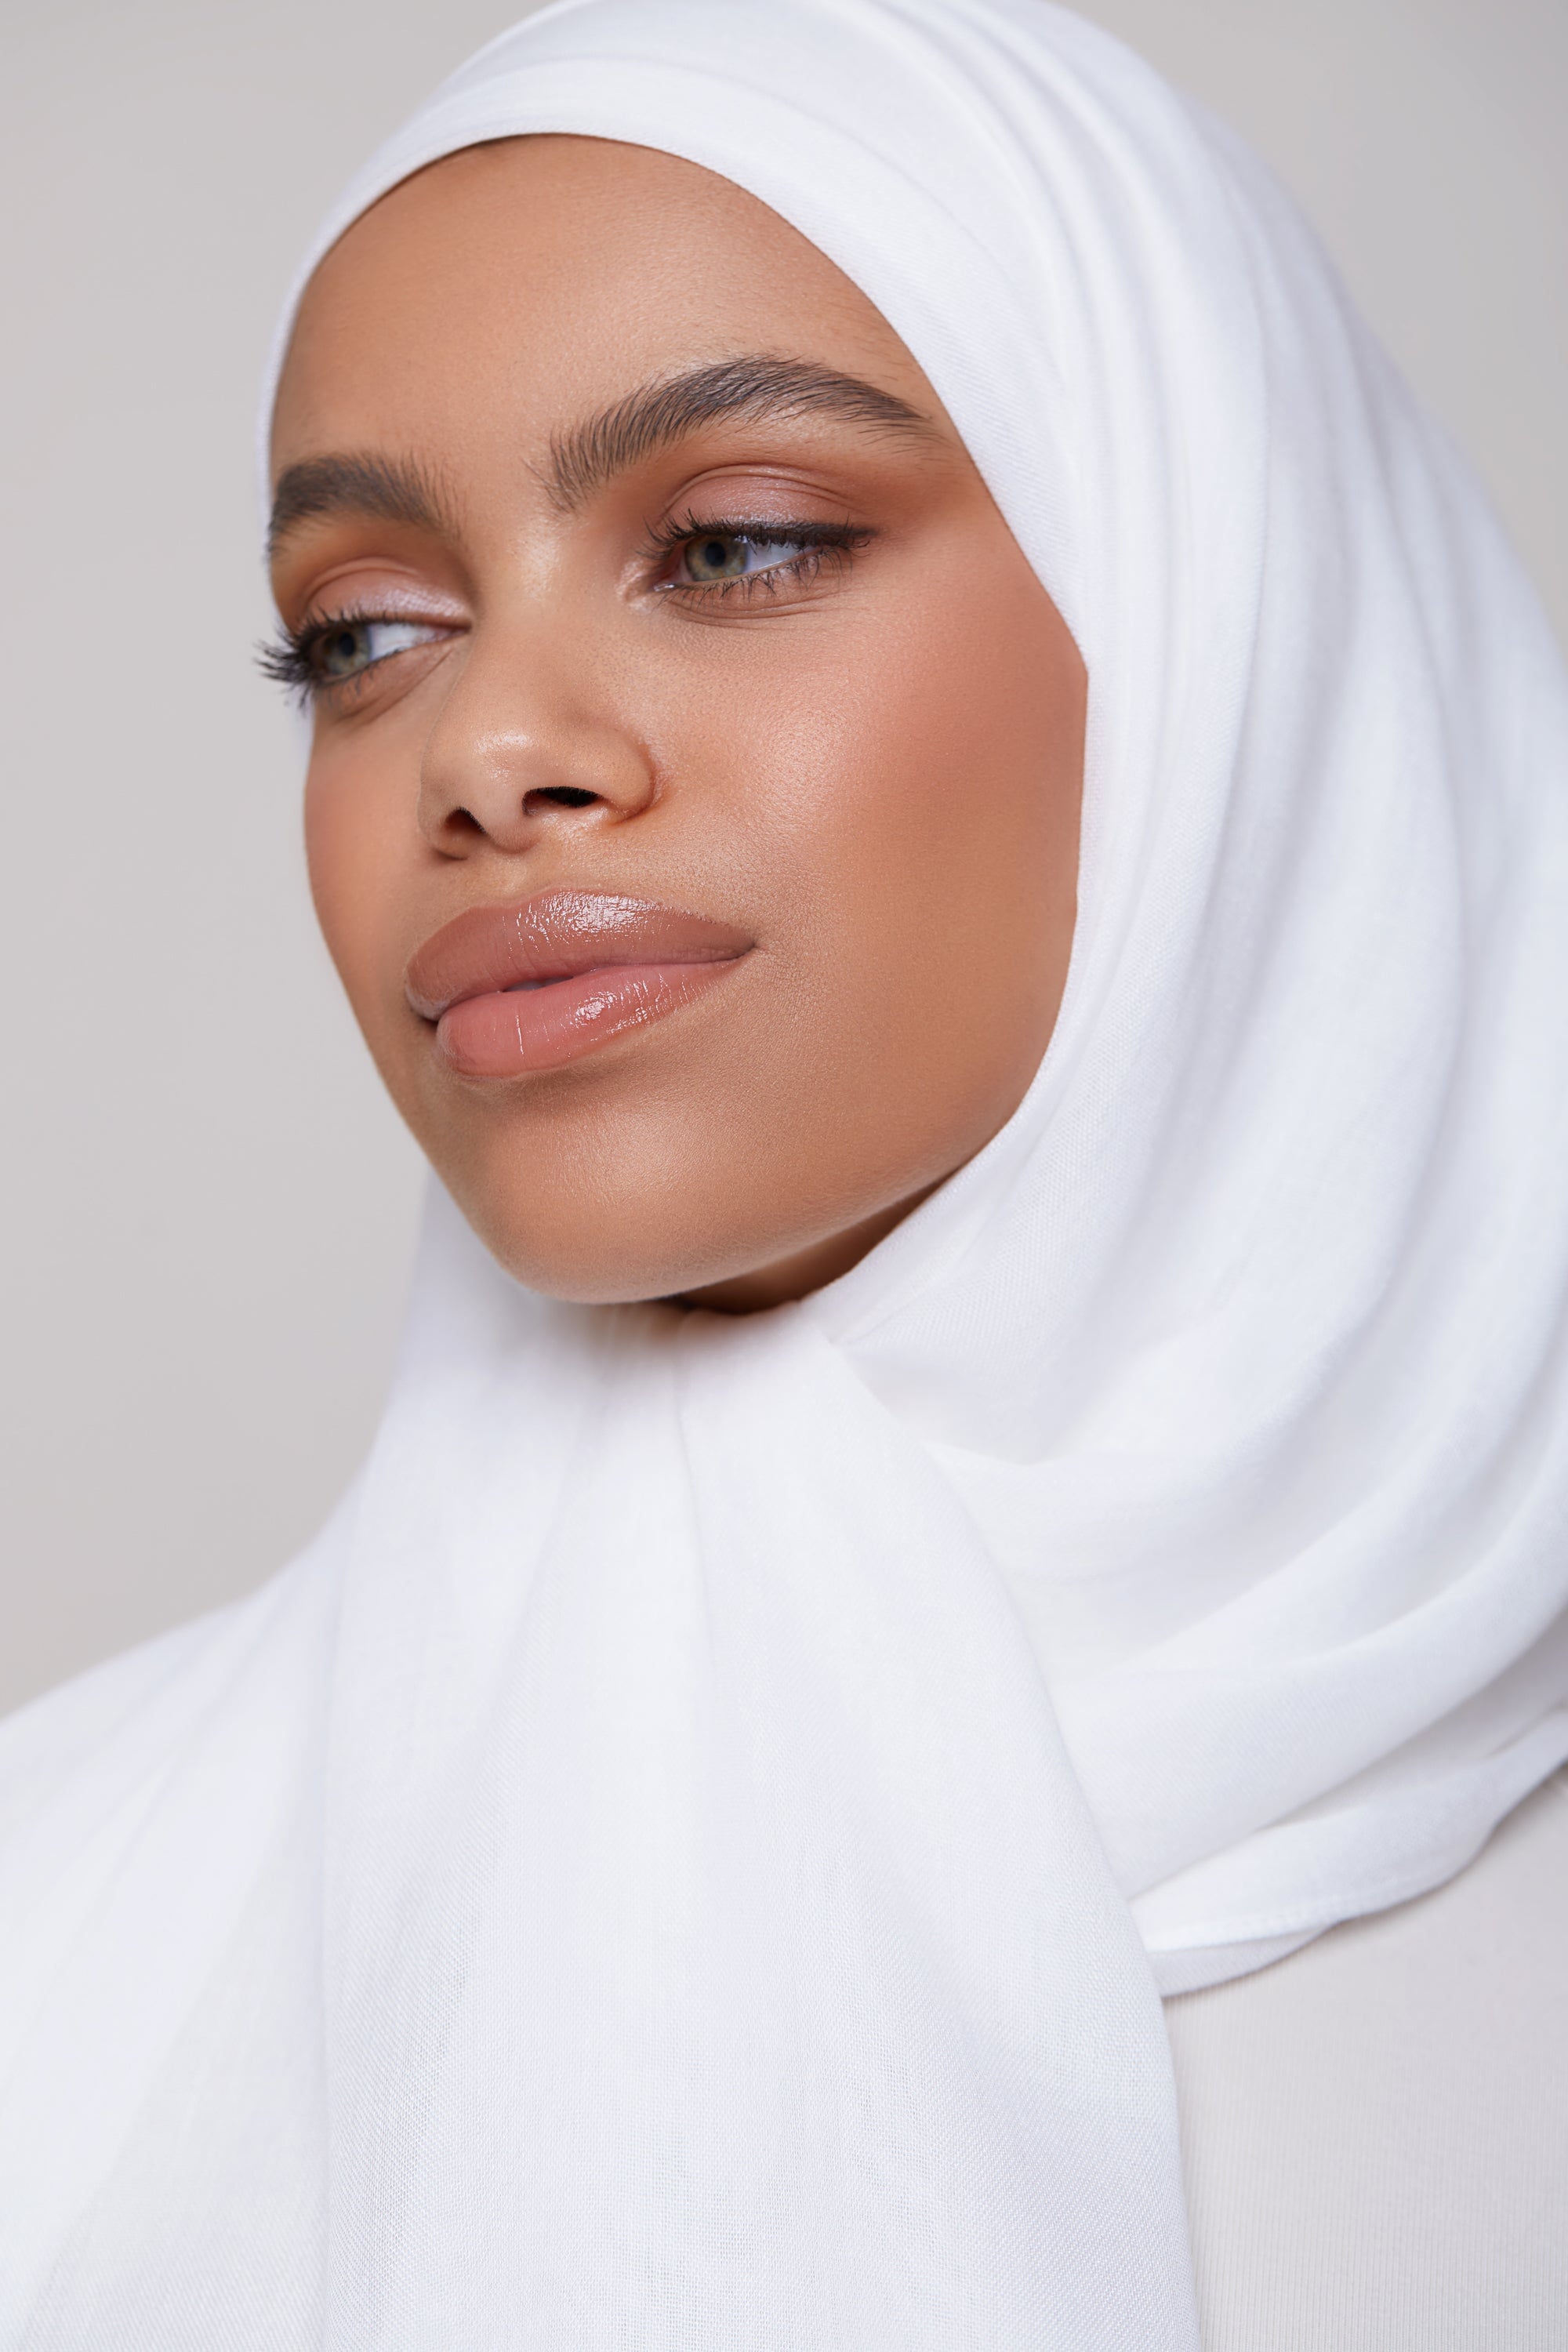 Modal Hijab - White epschoolboard 